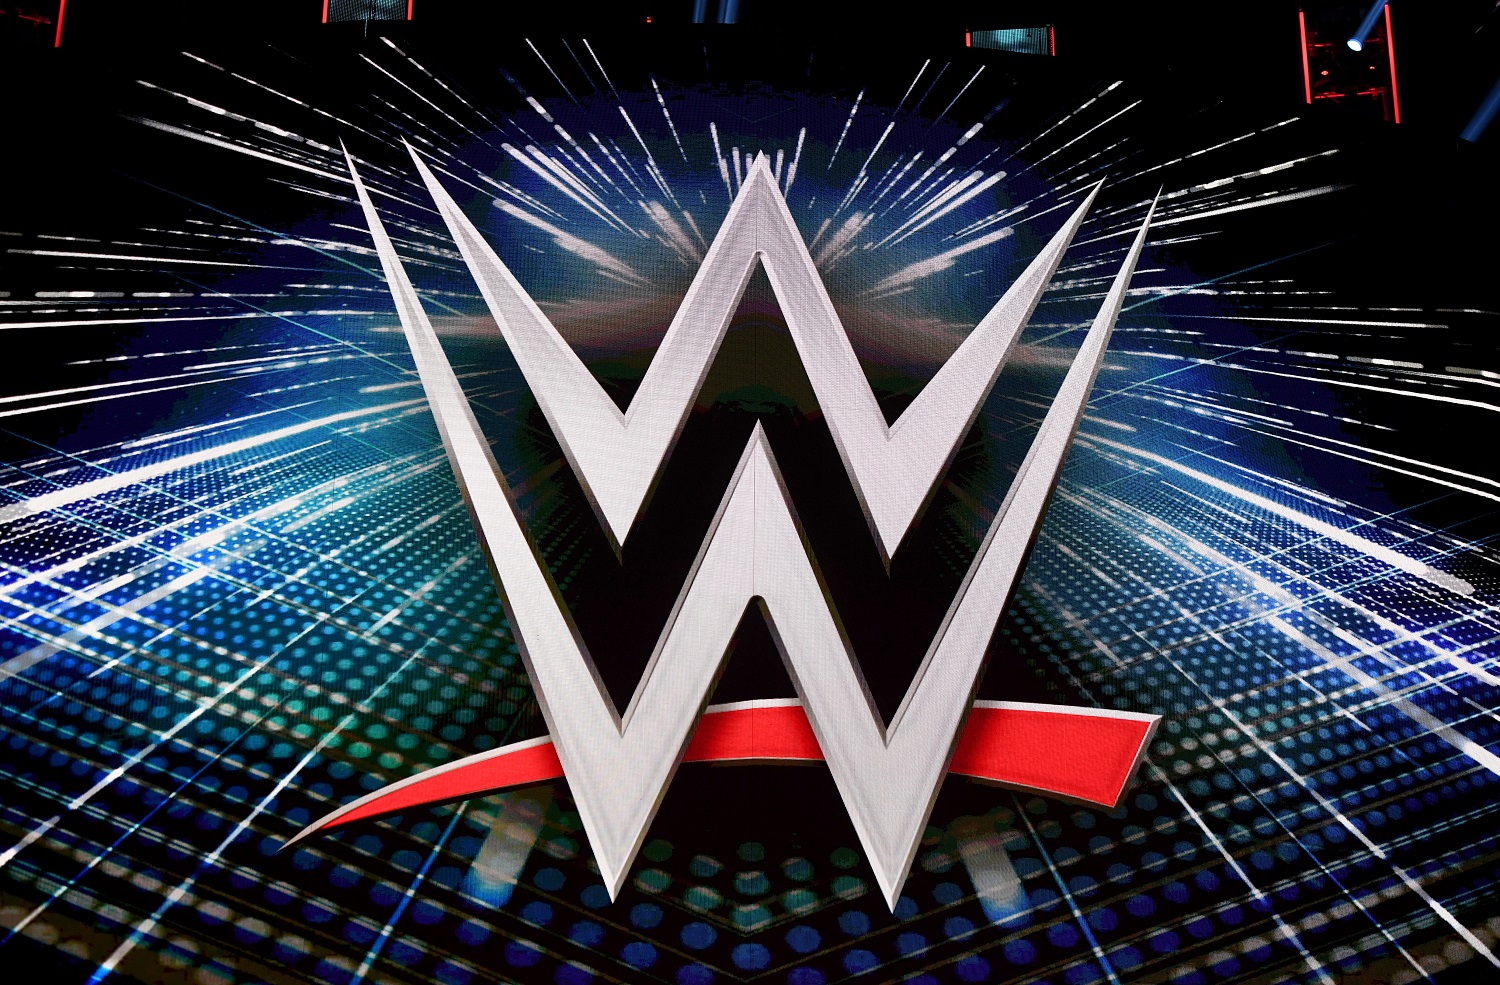 WWE logo